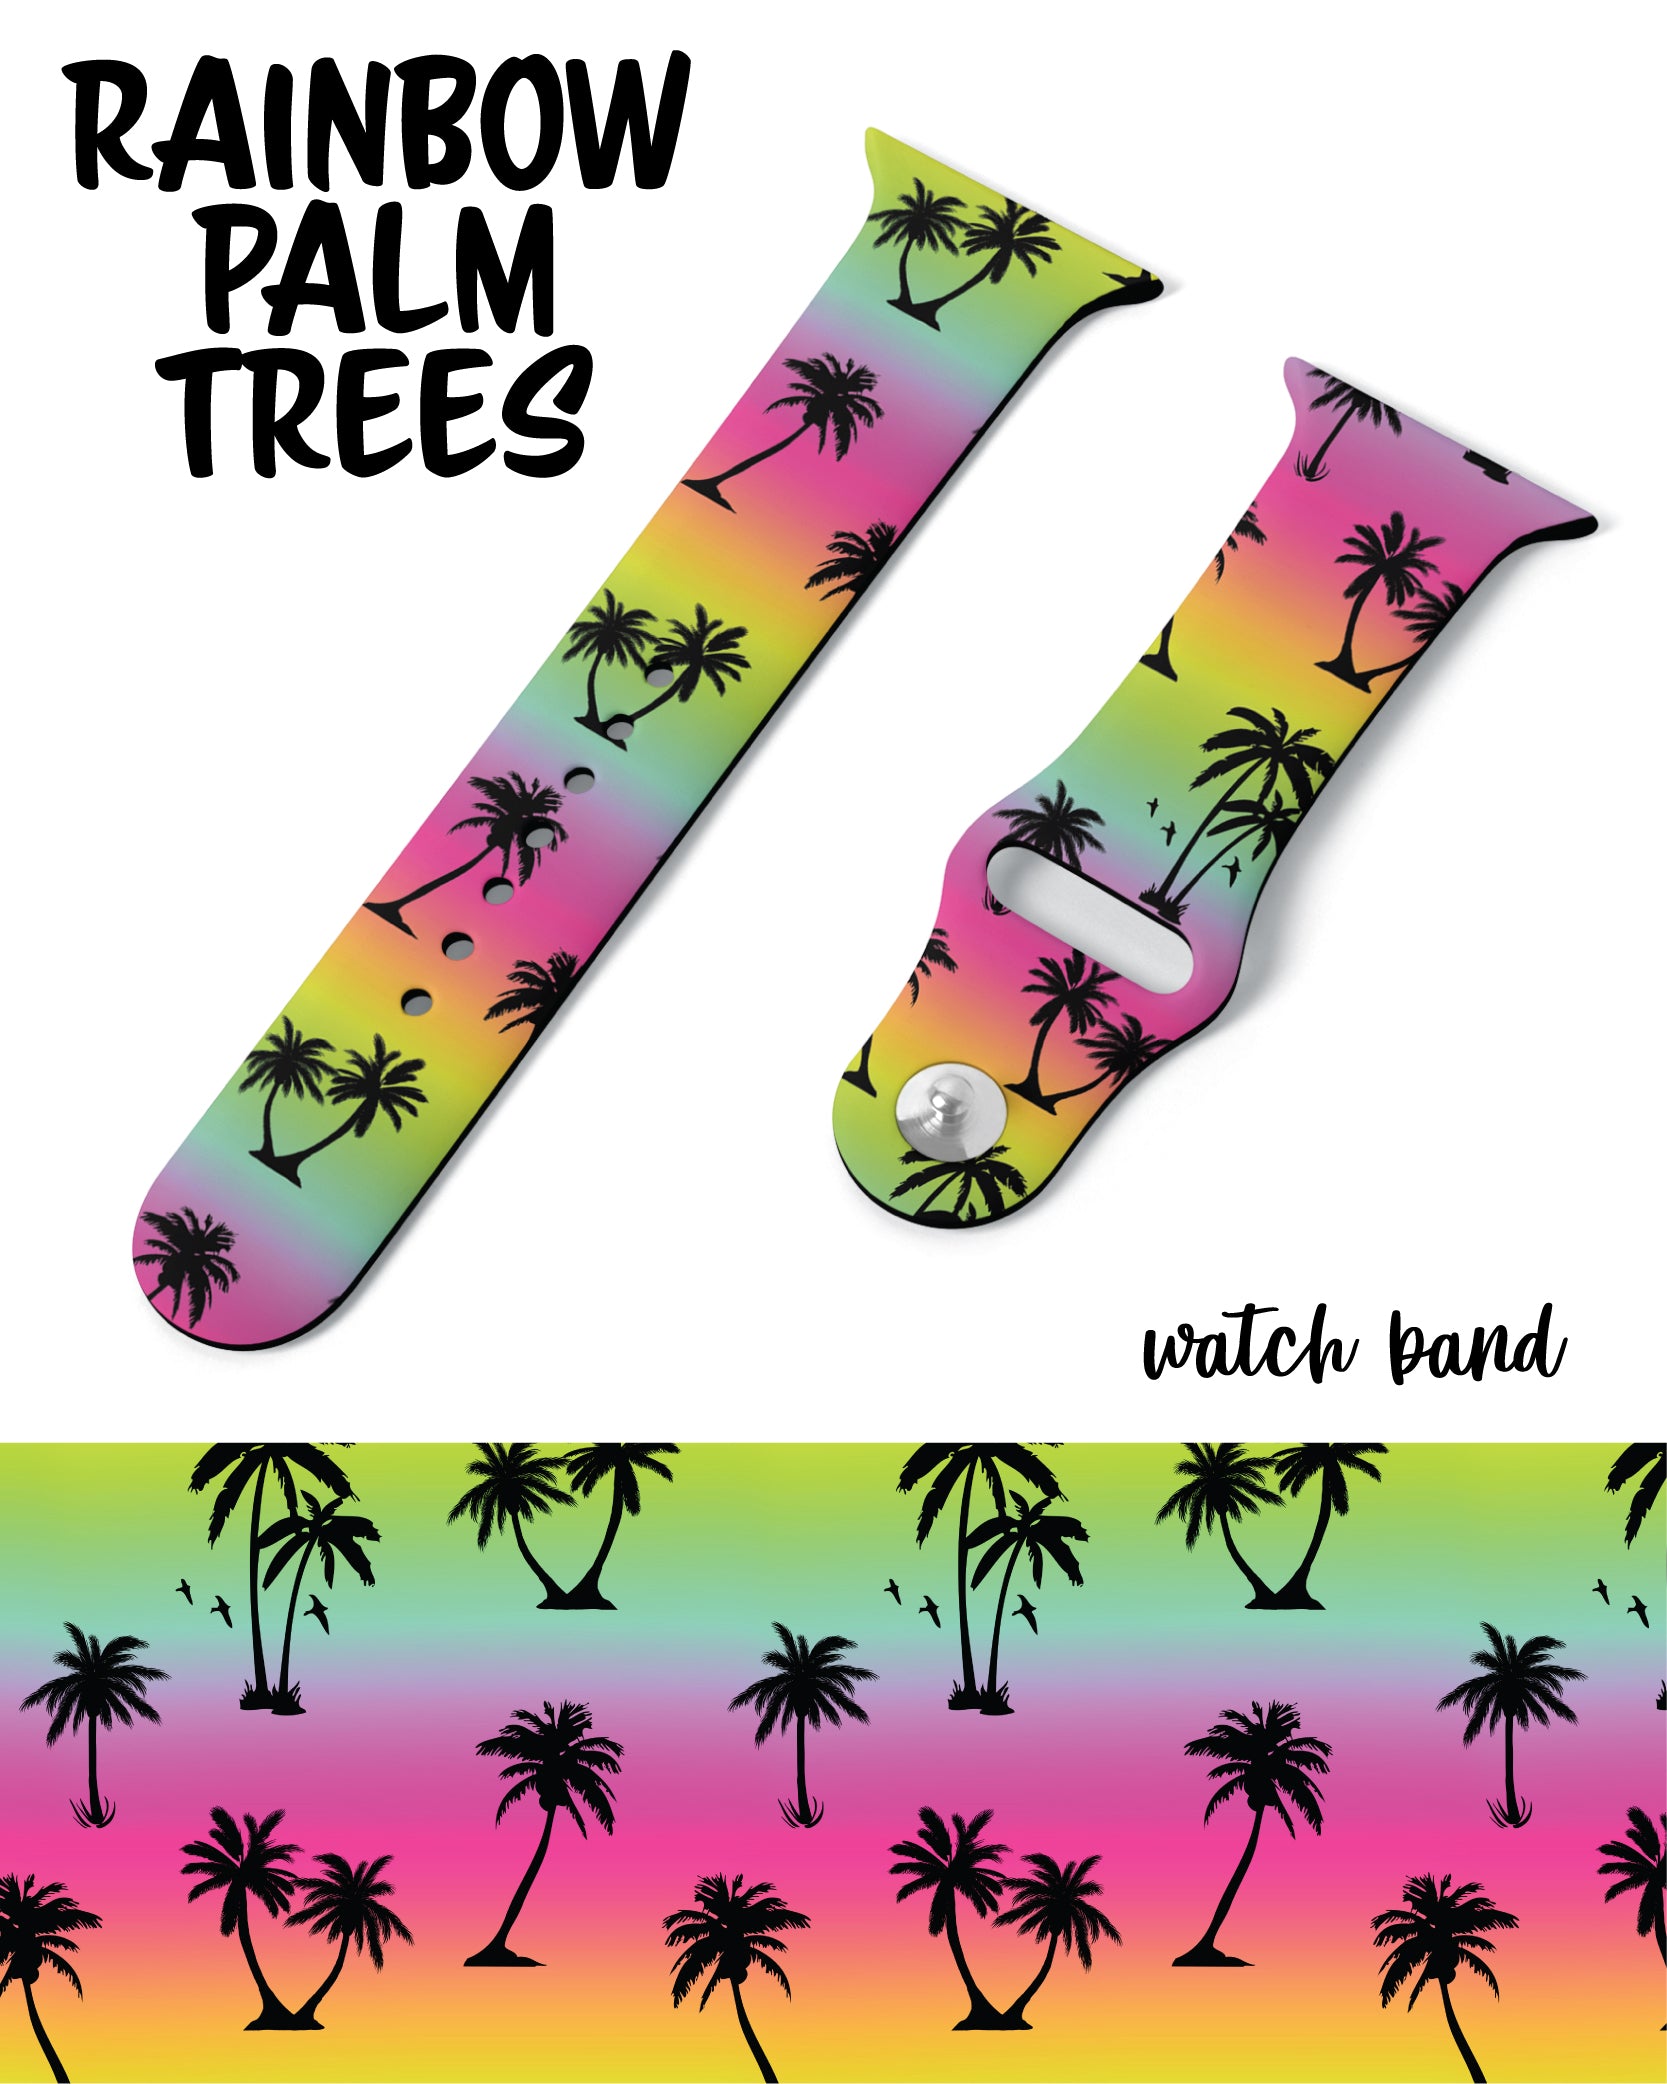 Rainbow Palm Trees Watch Band